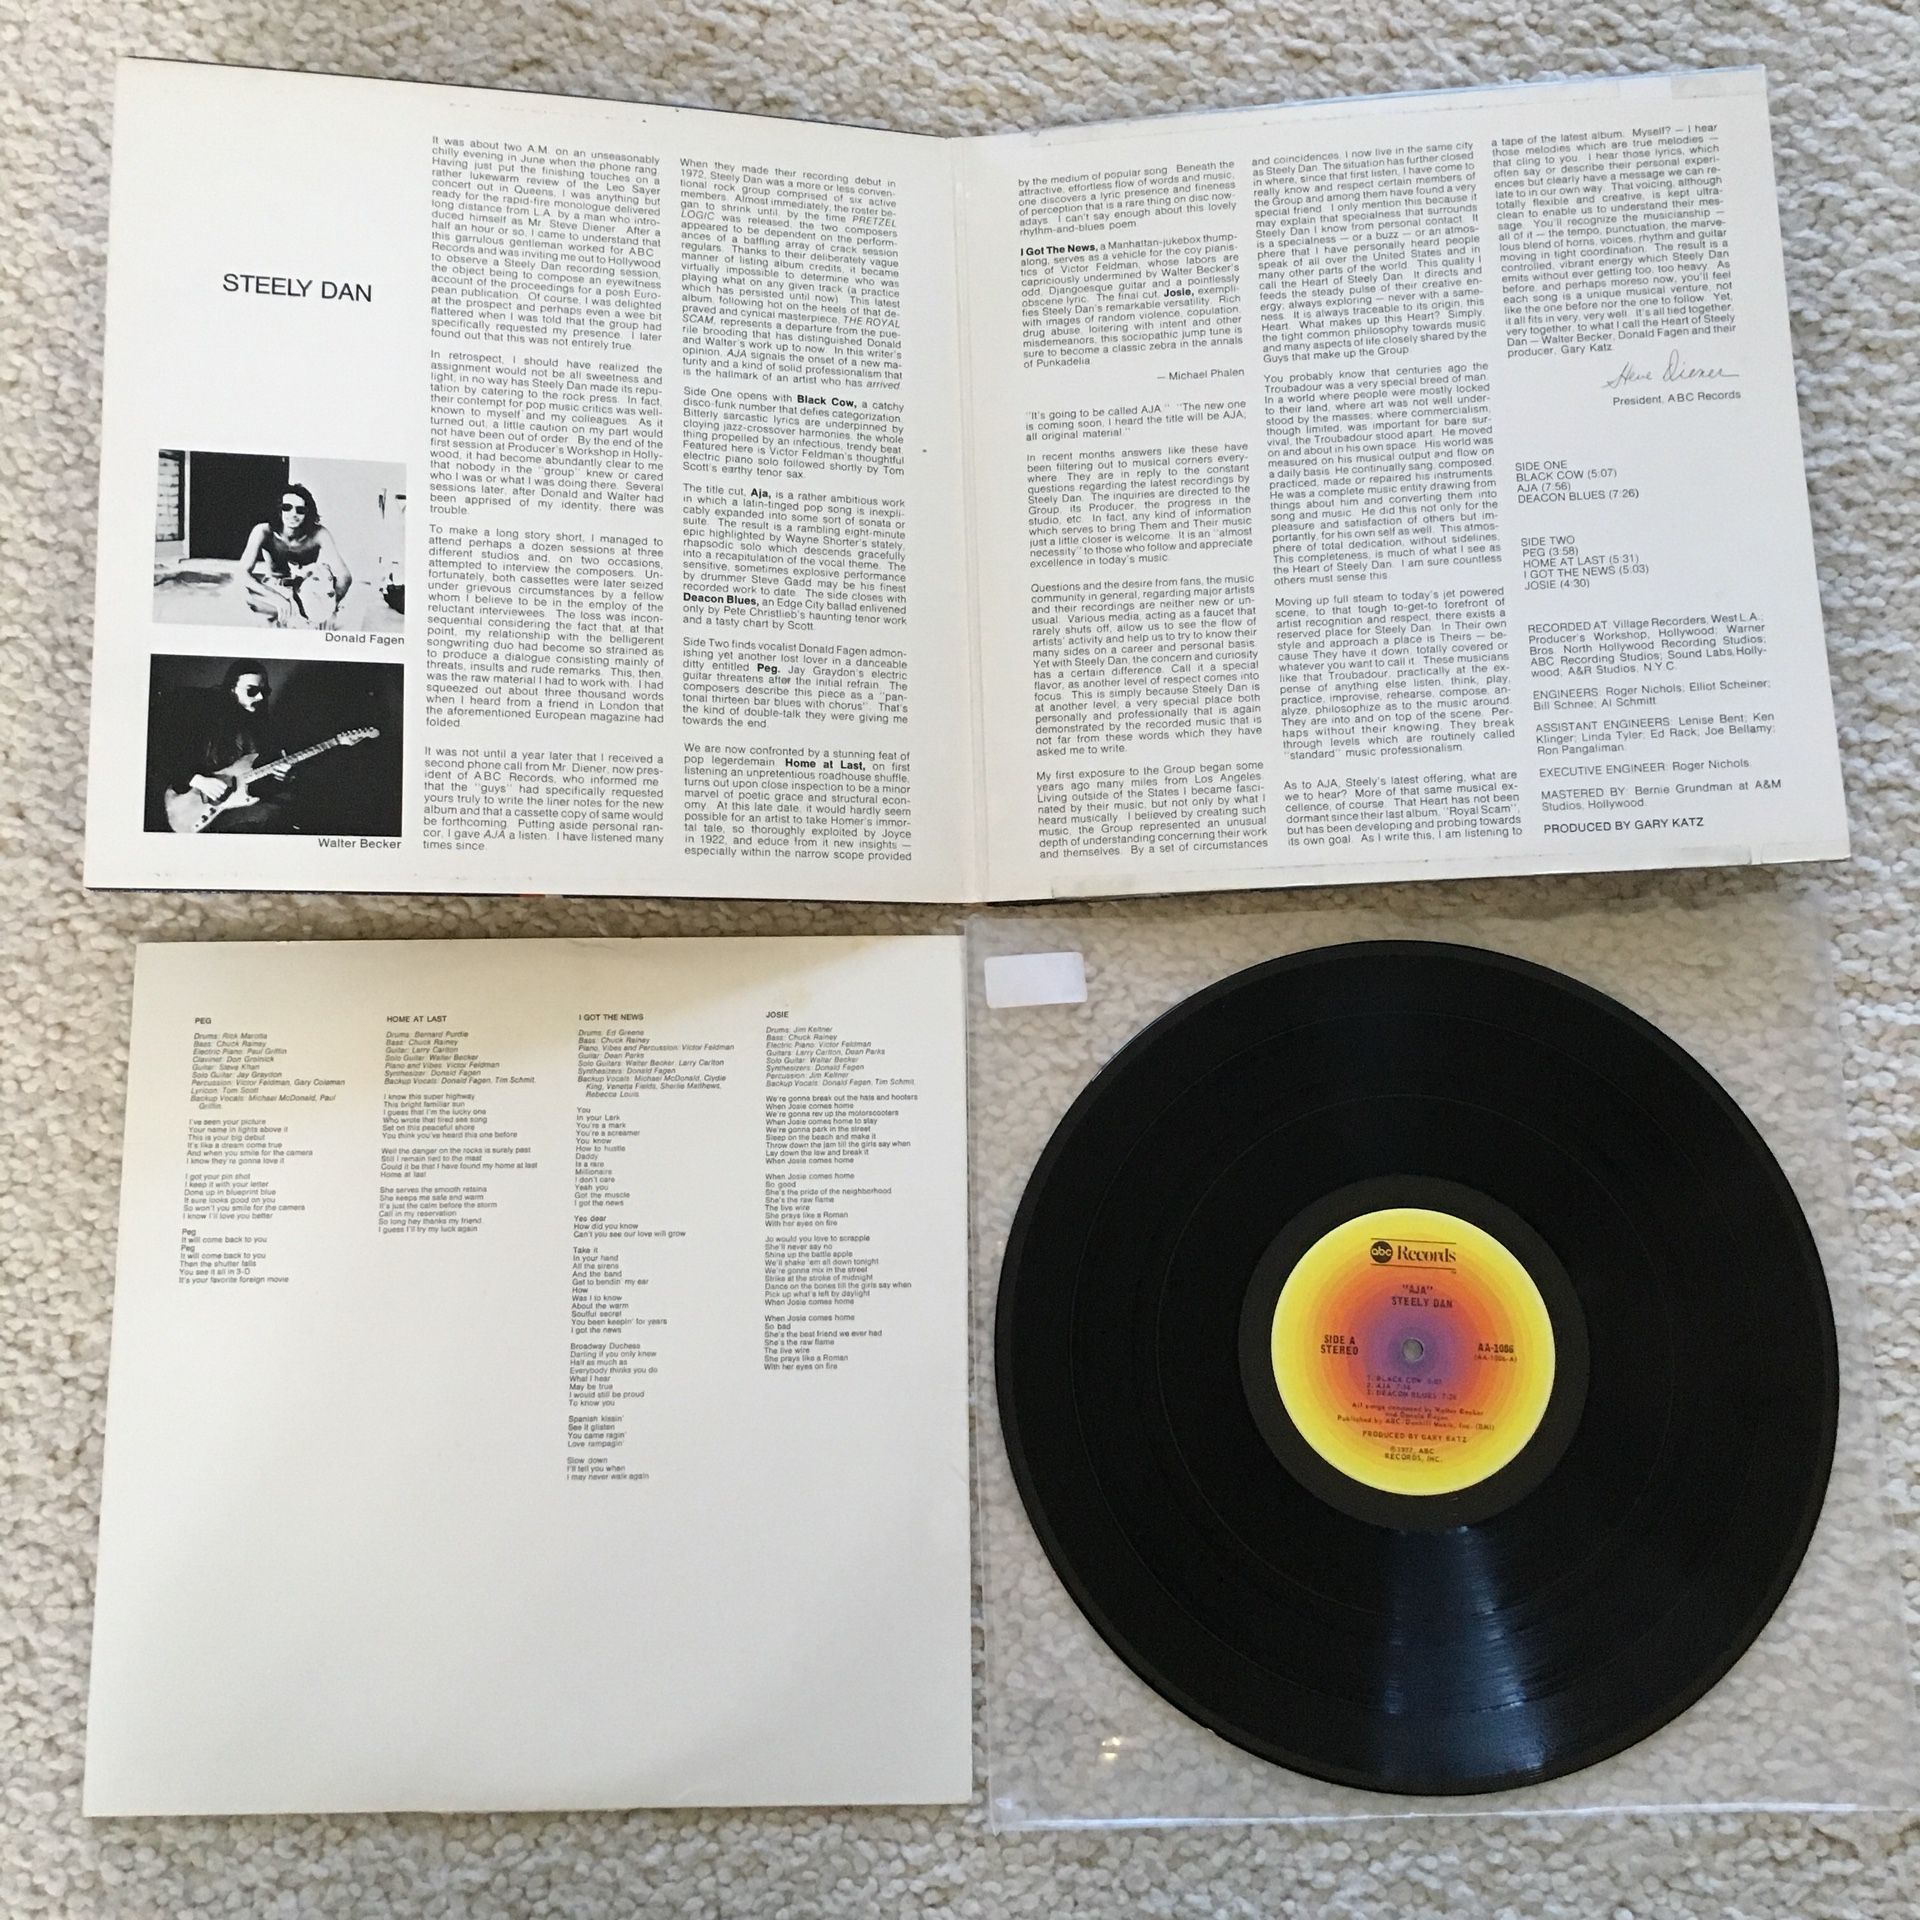 Steely Dan “Aja” vinyl lp 1977 ABC Records AB 1006 highly sought 